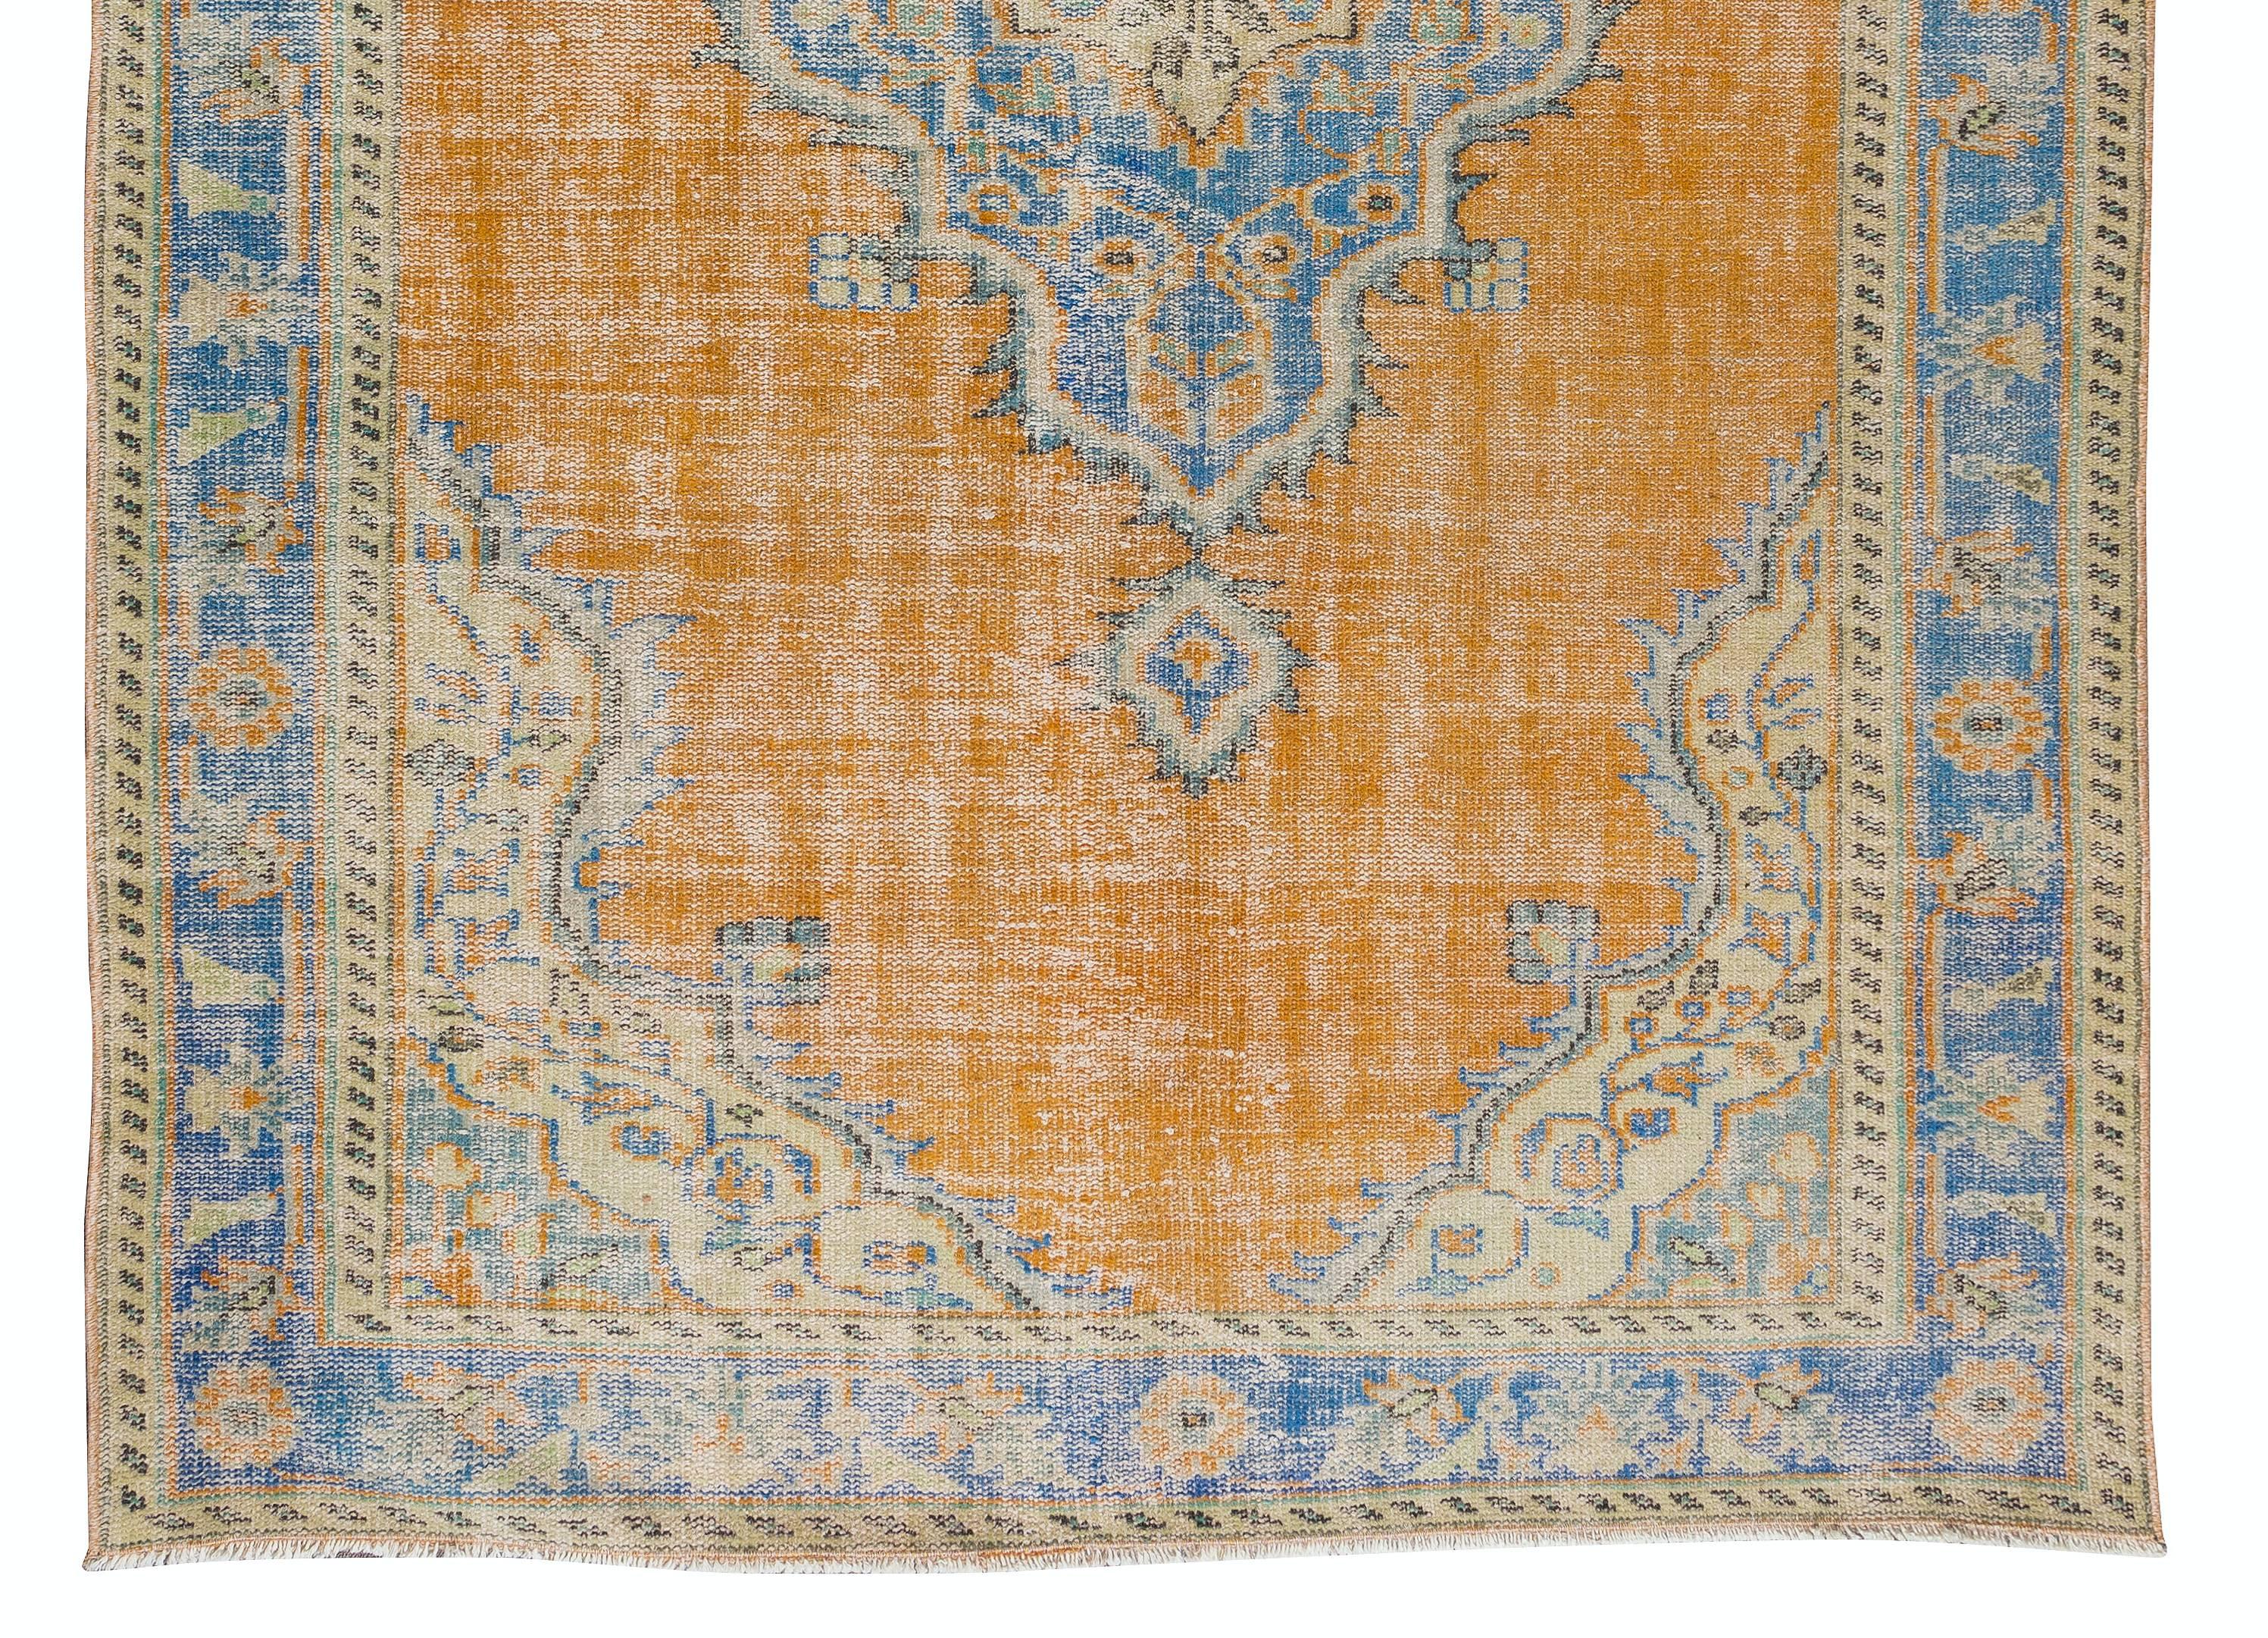 6x9 Ft Handmade Turkish Rug, 1960s Medallion Design Carpet in Orange & Navy Blue In Good Condition For Sale In Philadelphia, PA